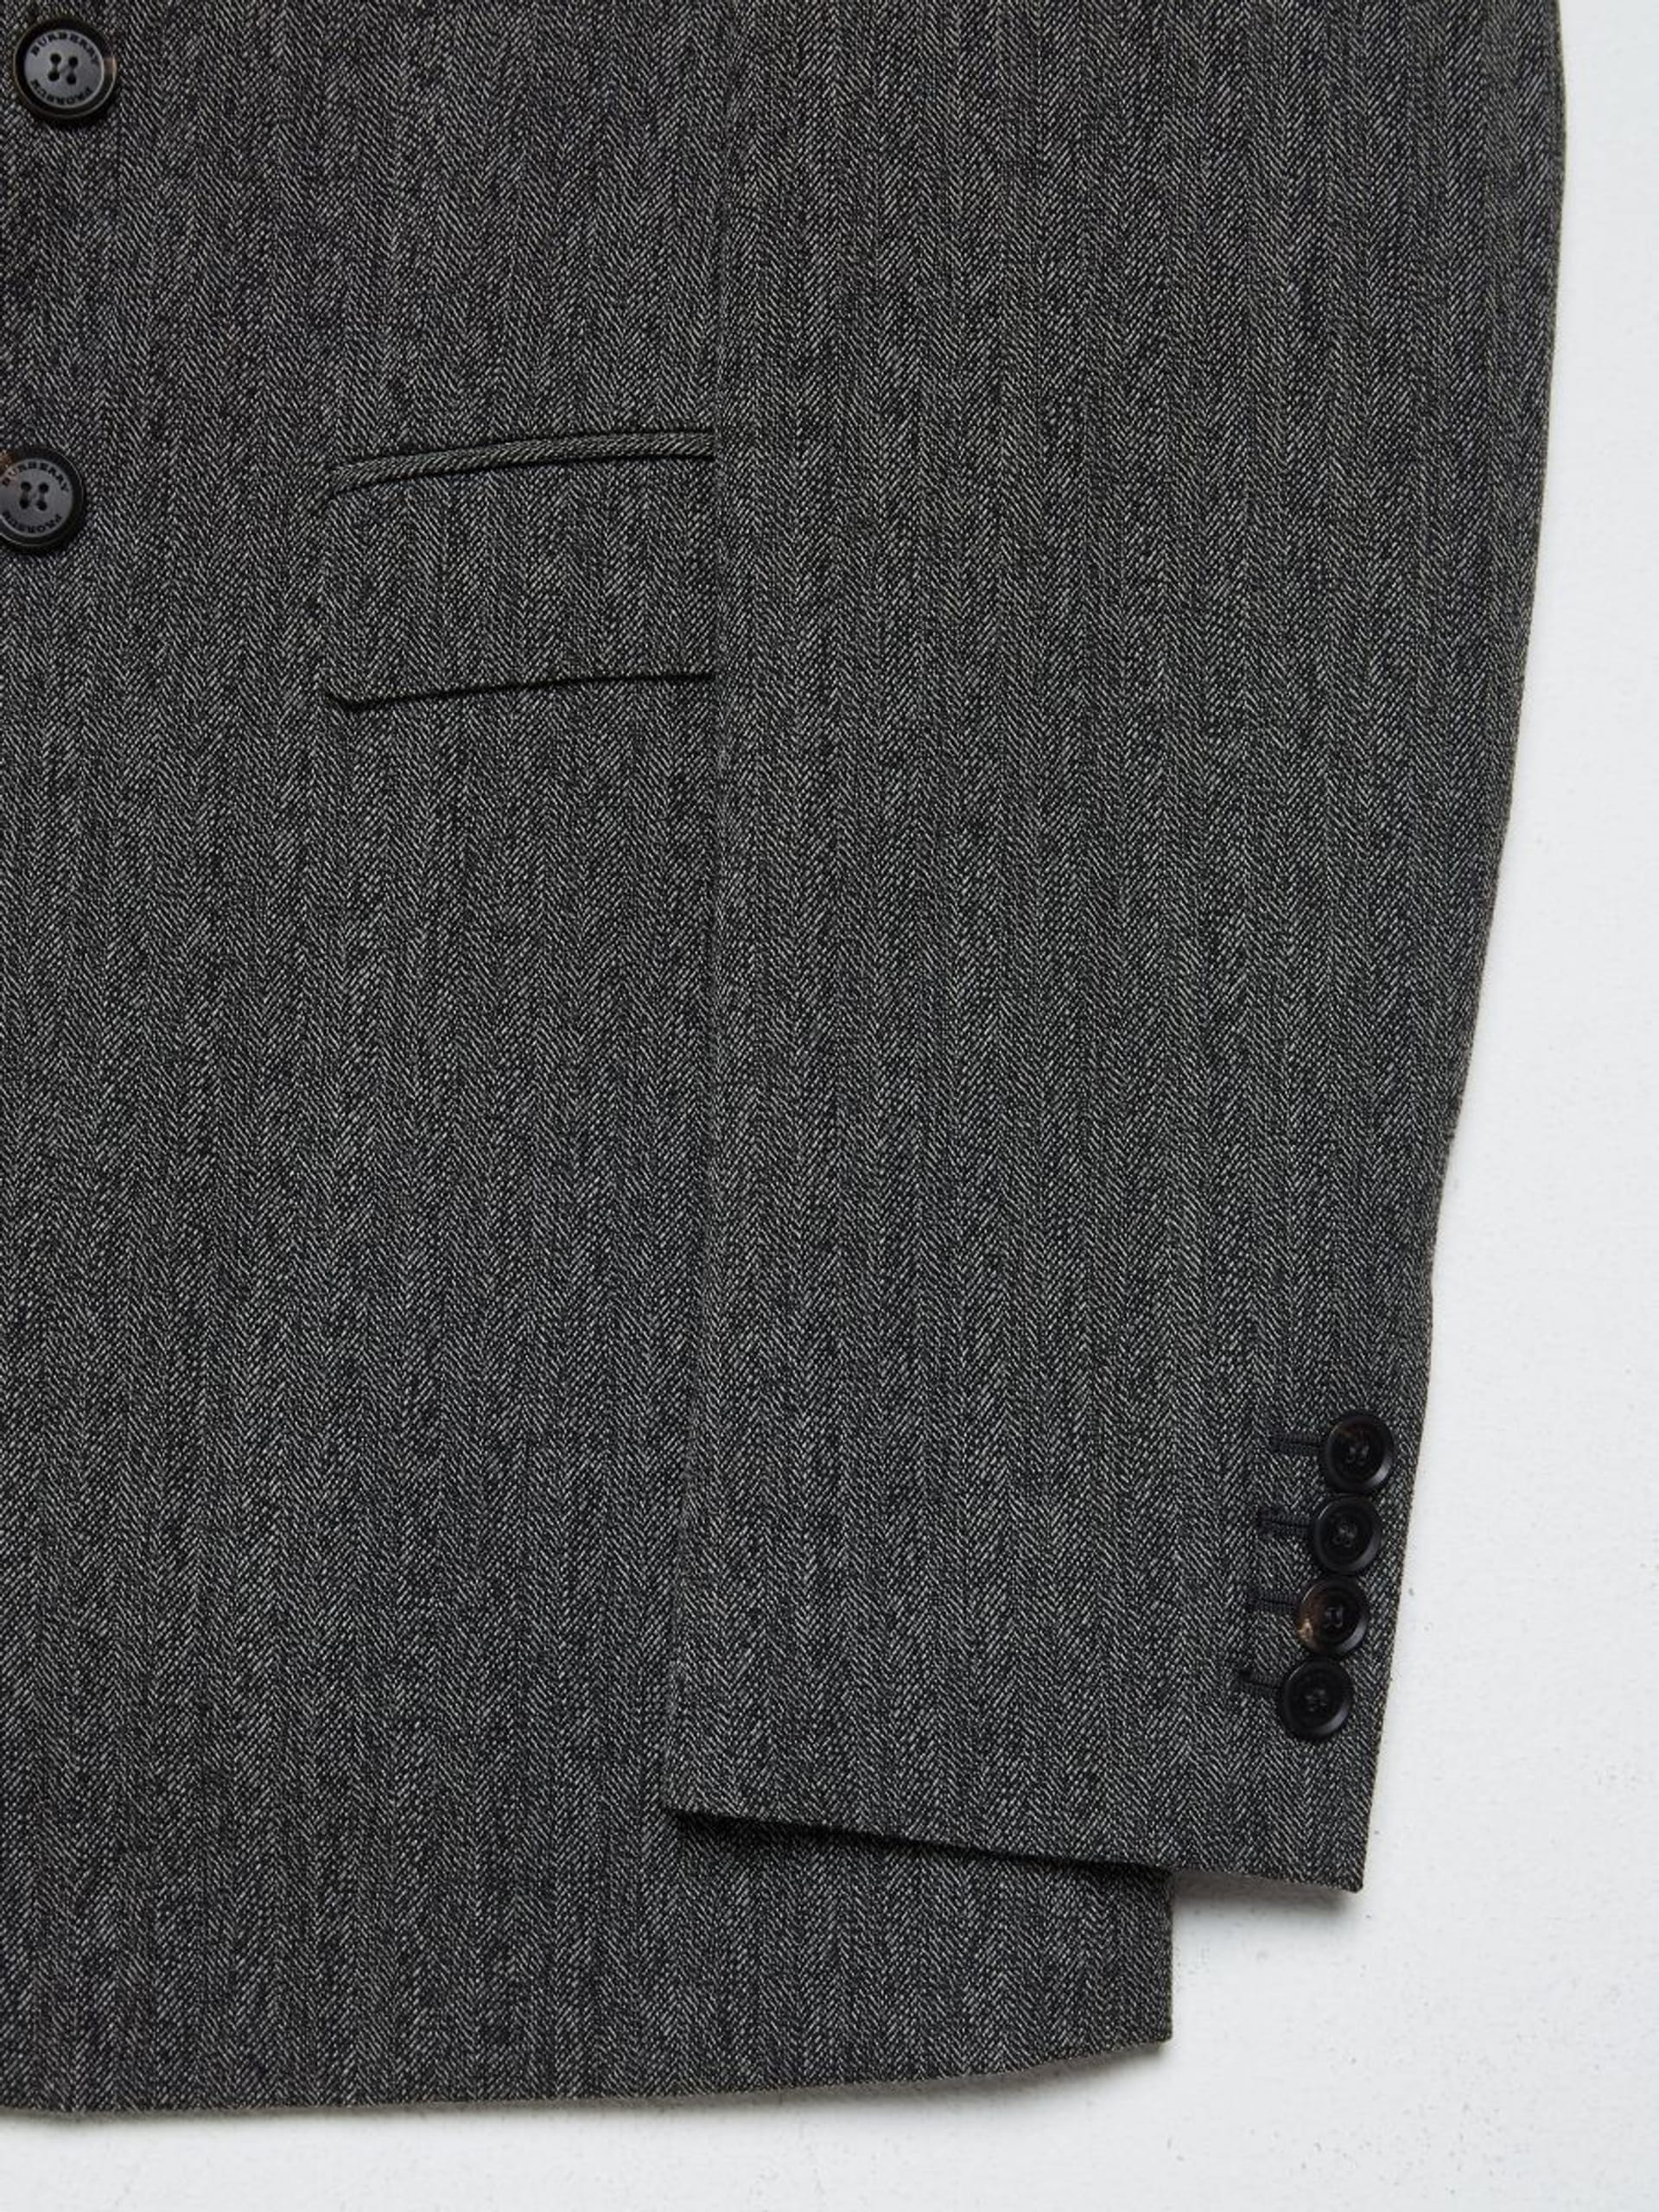 Burberry Prorsum Dark Grey Double Breasted Herringbone Wool Jacket